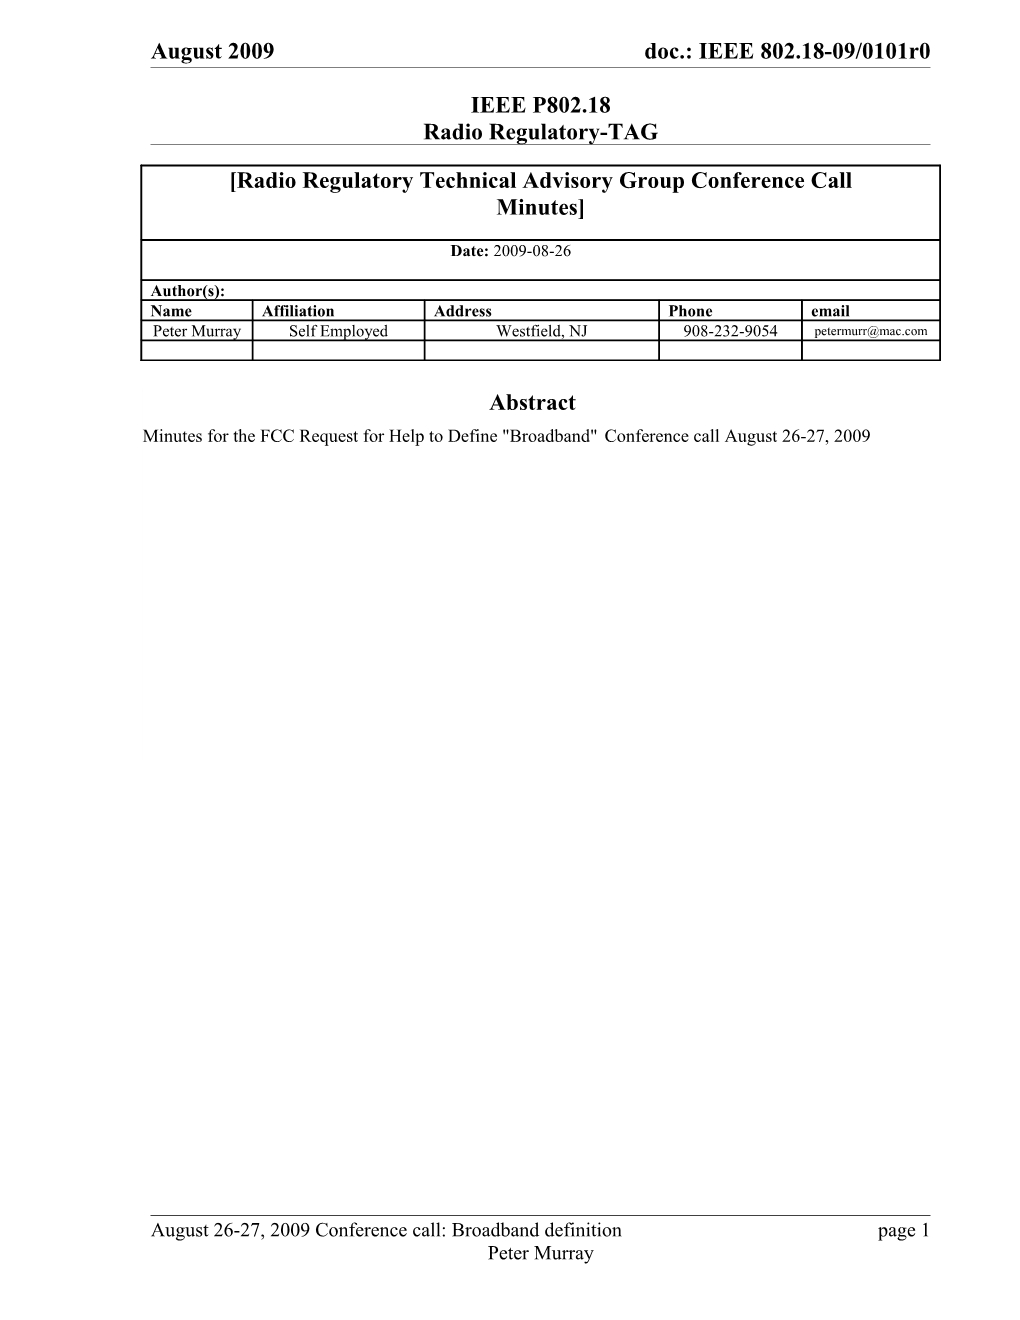 IEEE P802.18 Radio Regulatory-TAG